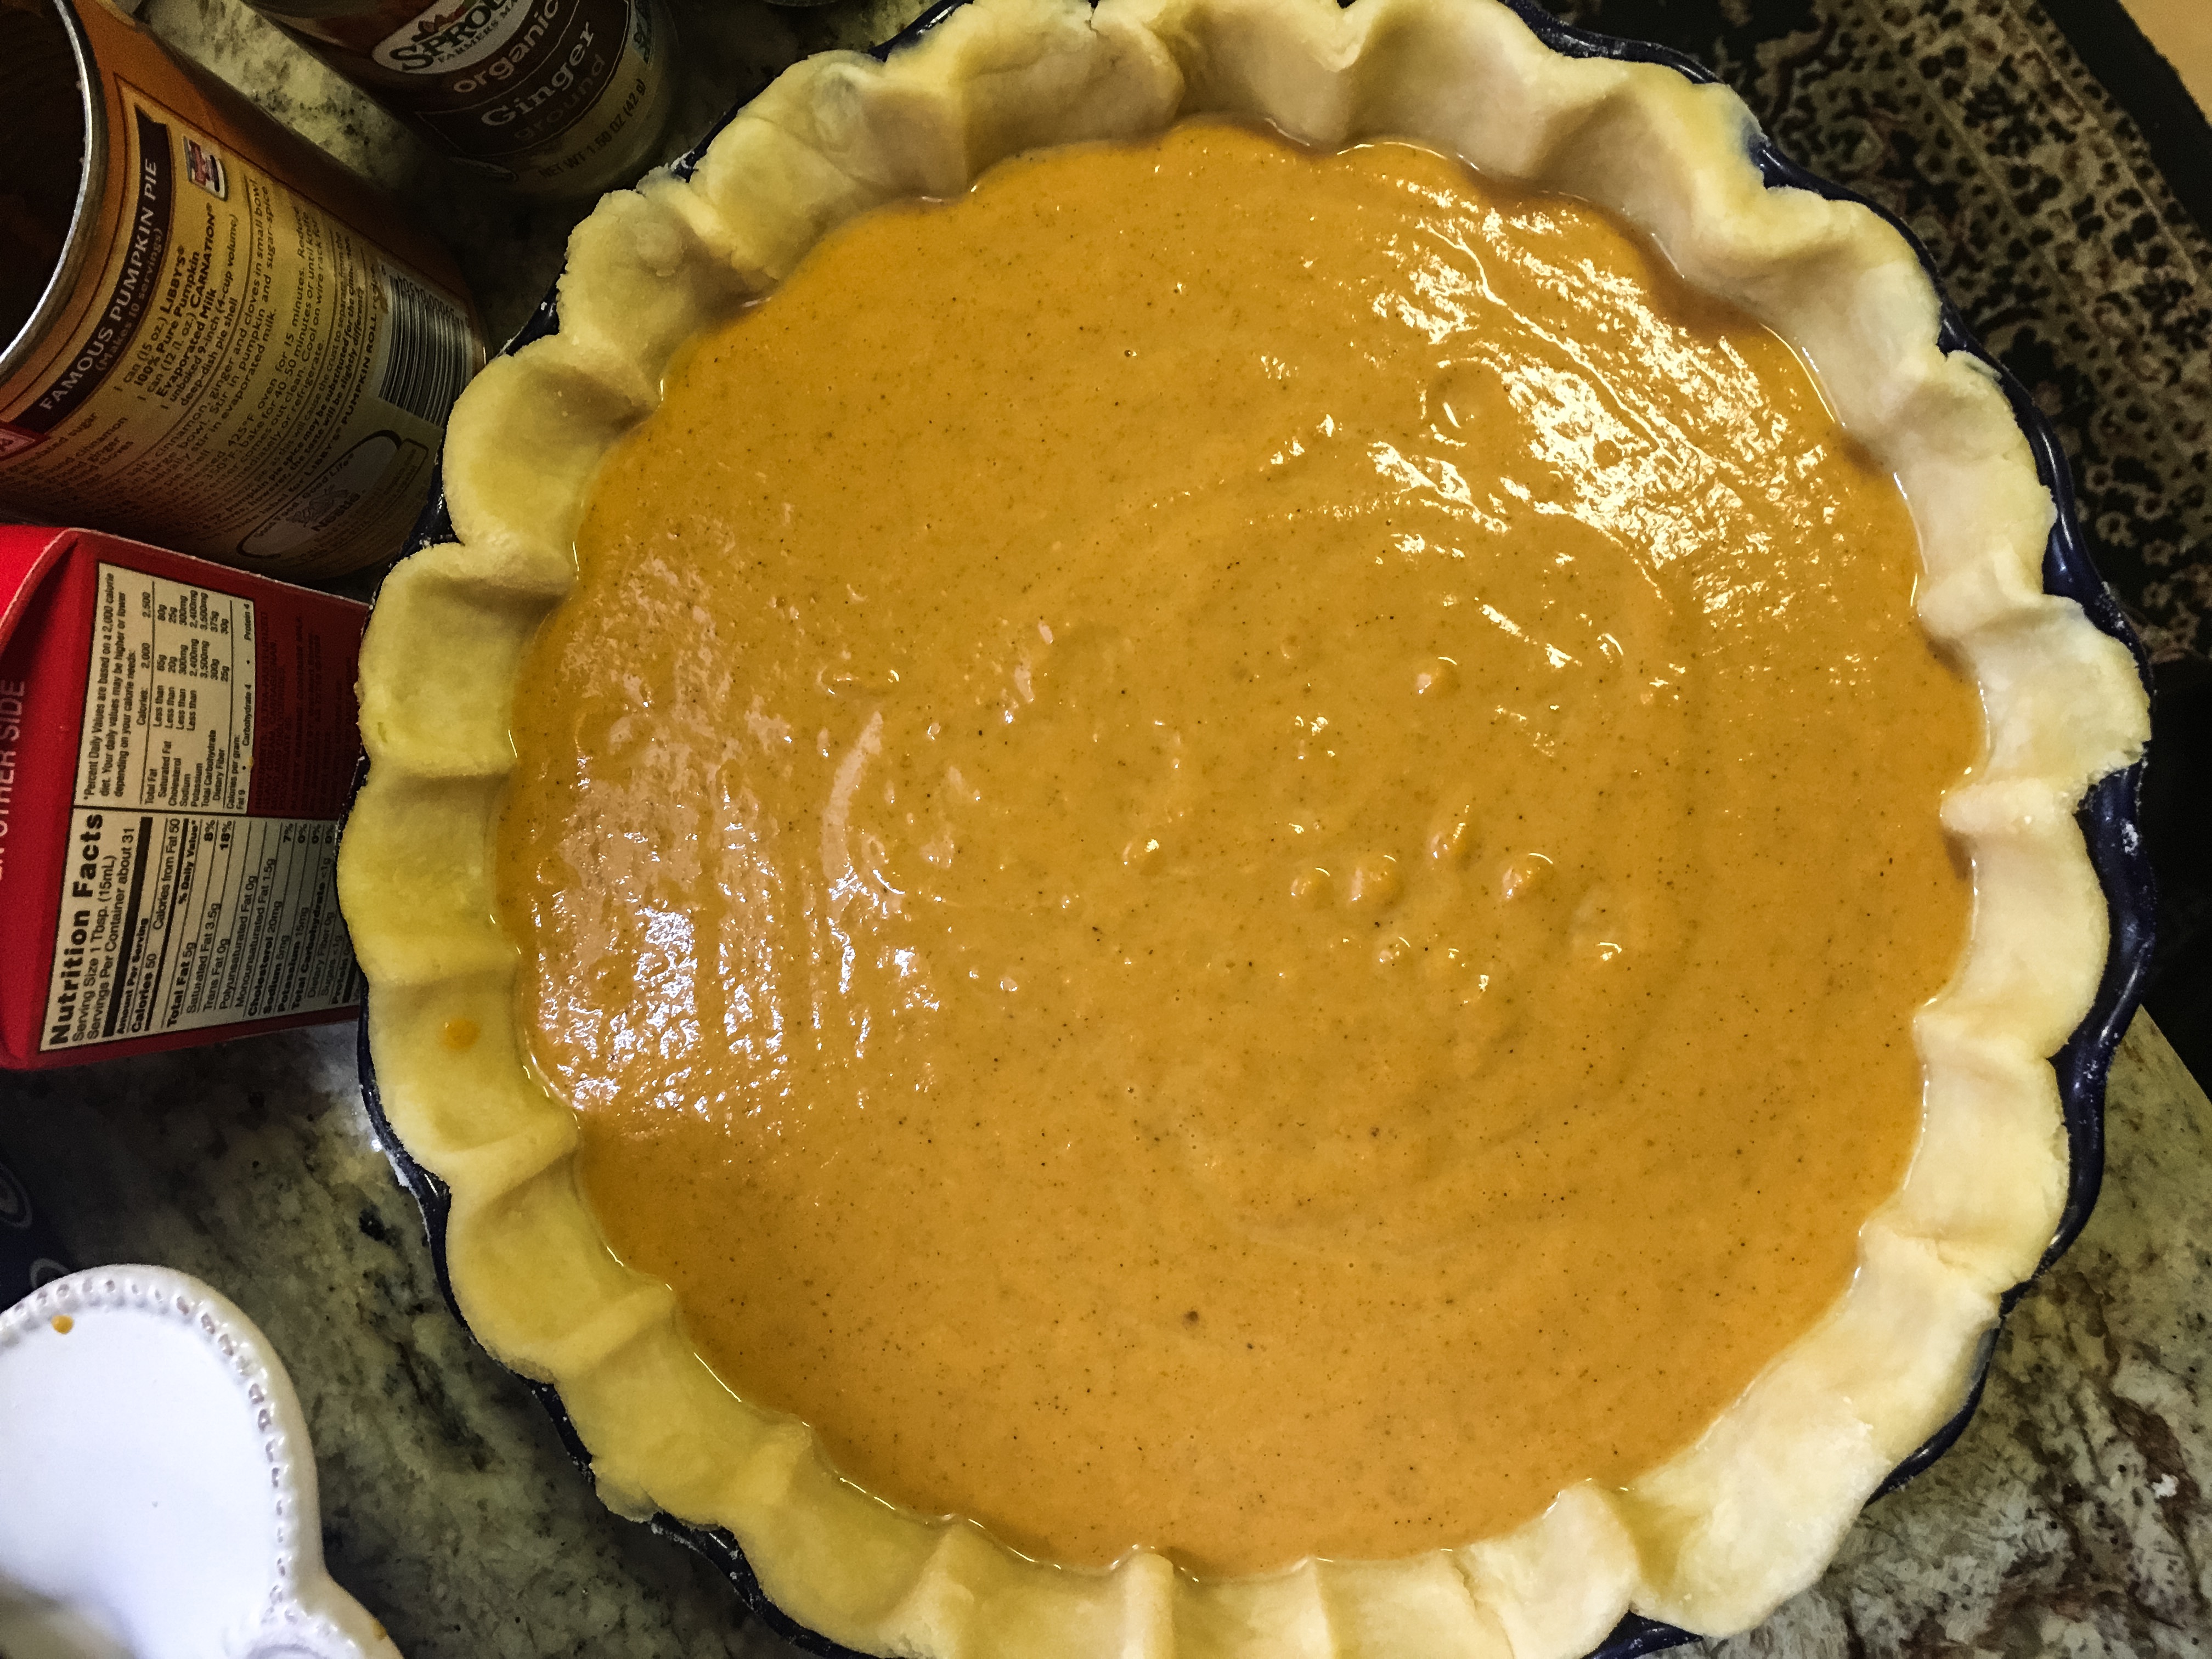 Marie Callender's pumpkin pie recipe ready to bake